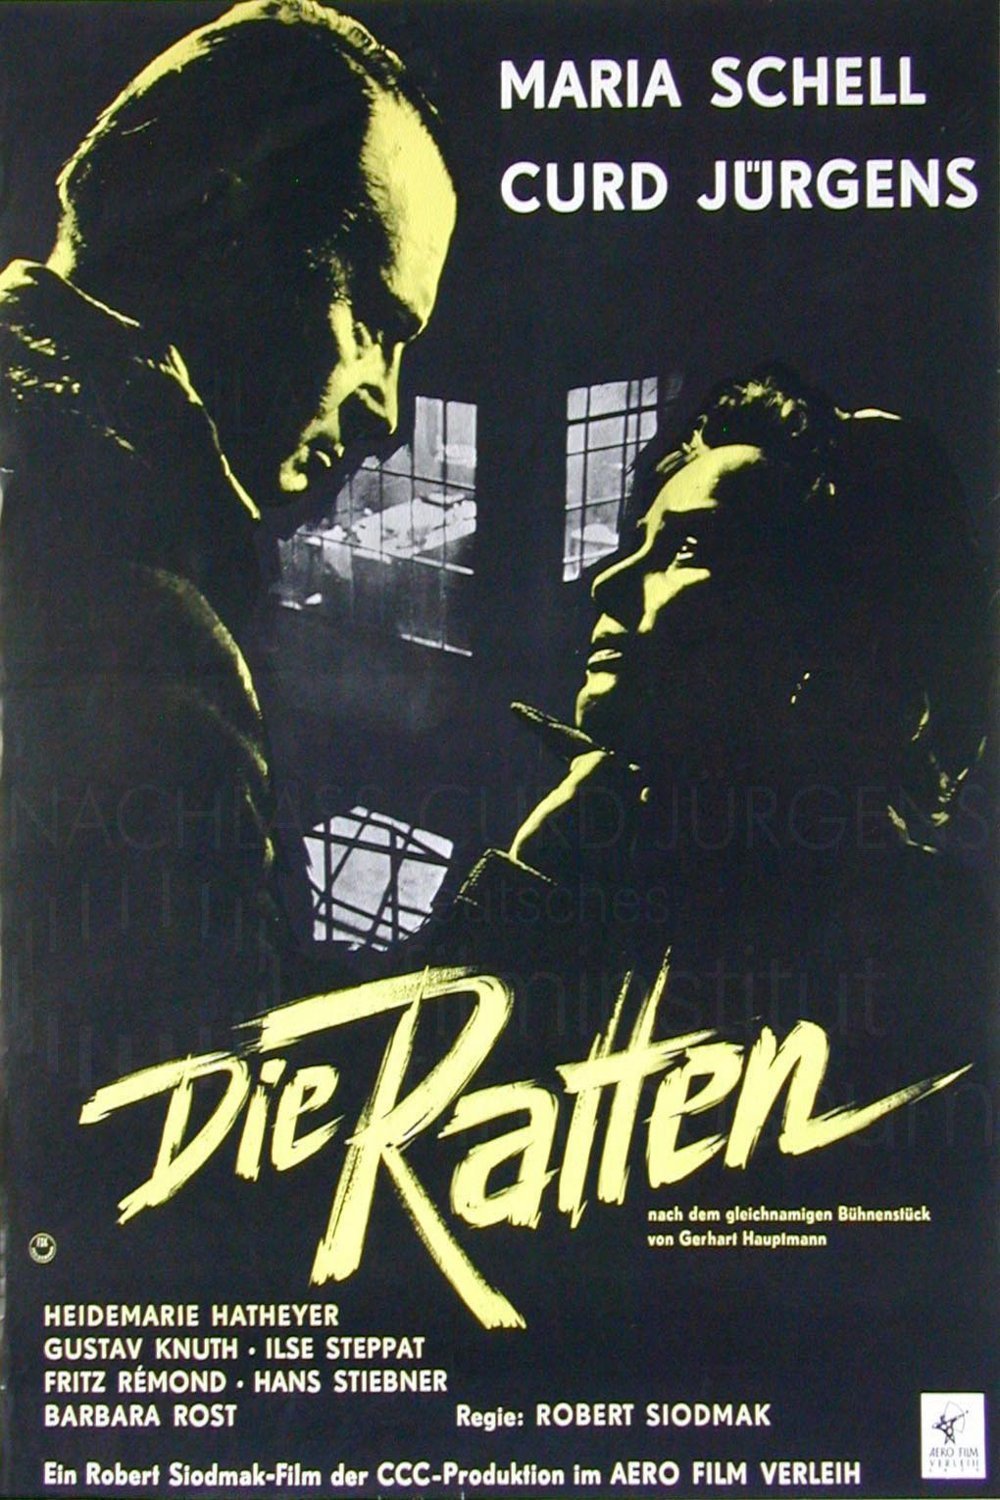 L'affiche originale du film Die Ratten en allemand